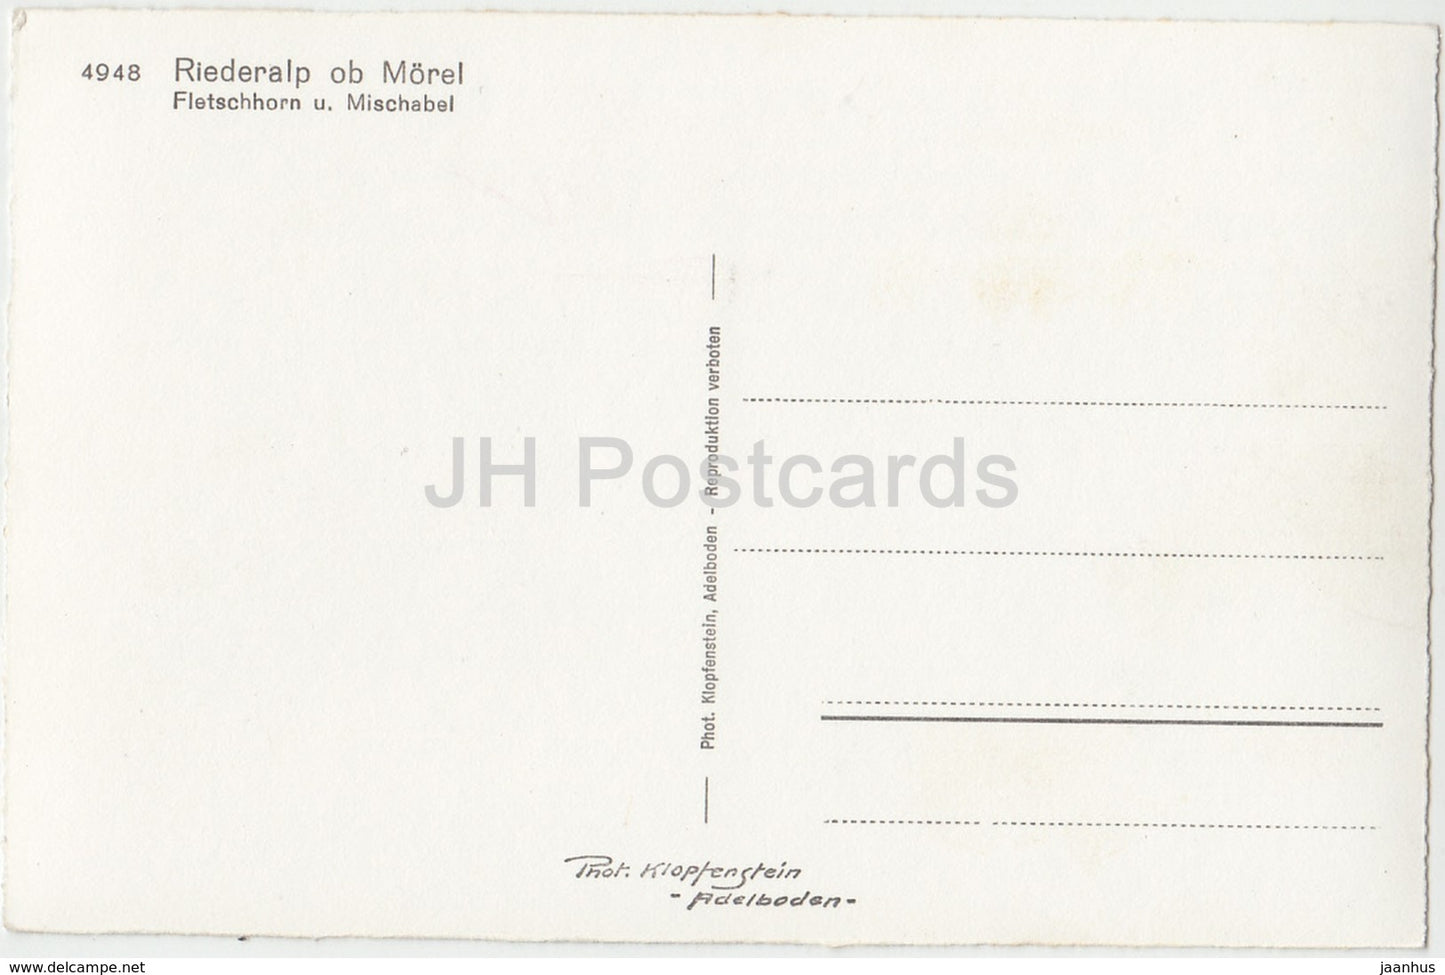 Riederalp ob Morel - Fletschhorn u. Mischabel - cow - 4948 - Switzerland - old postcard - unused